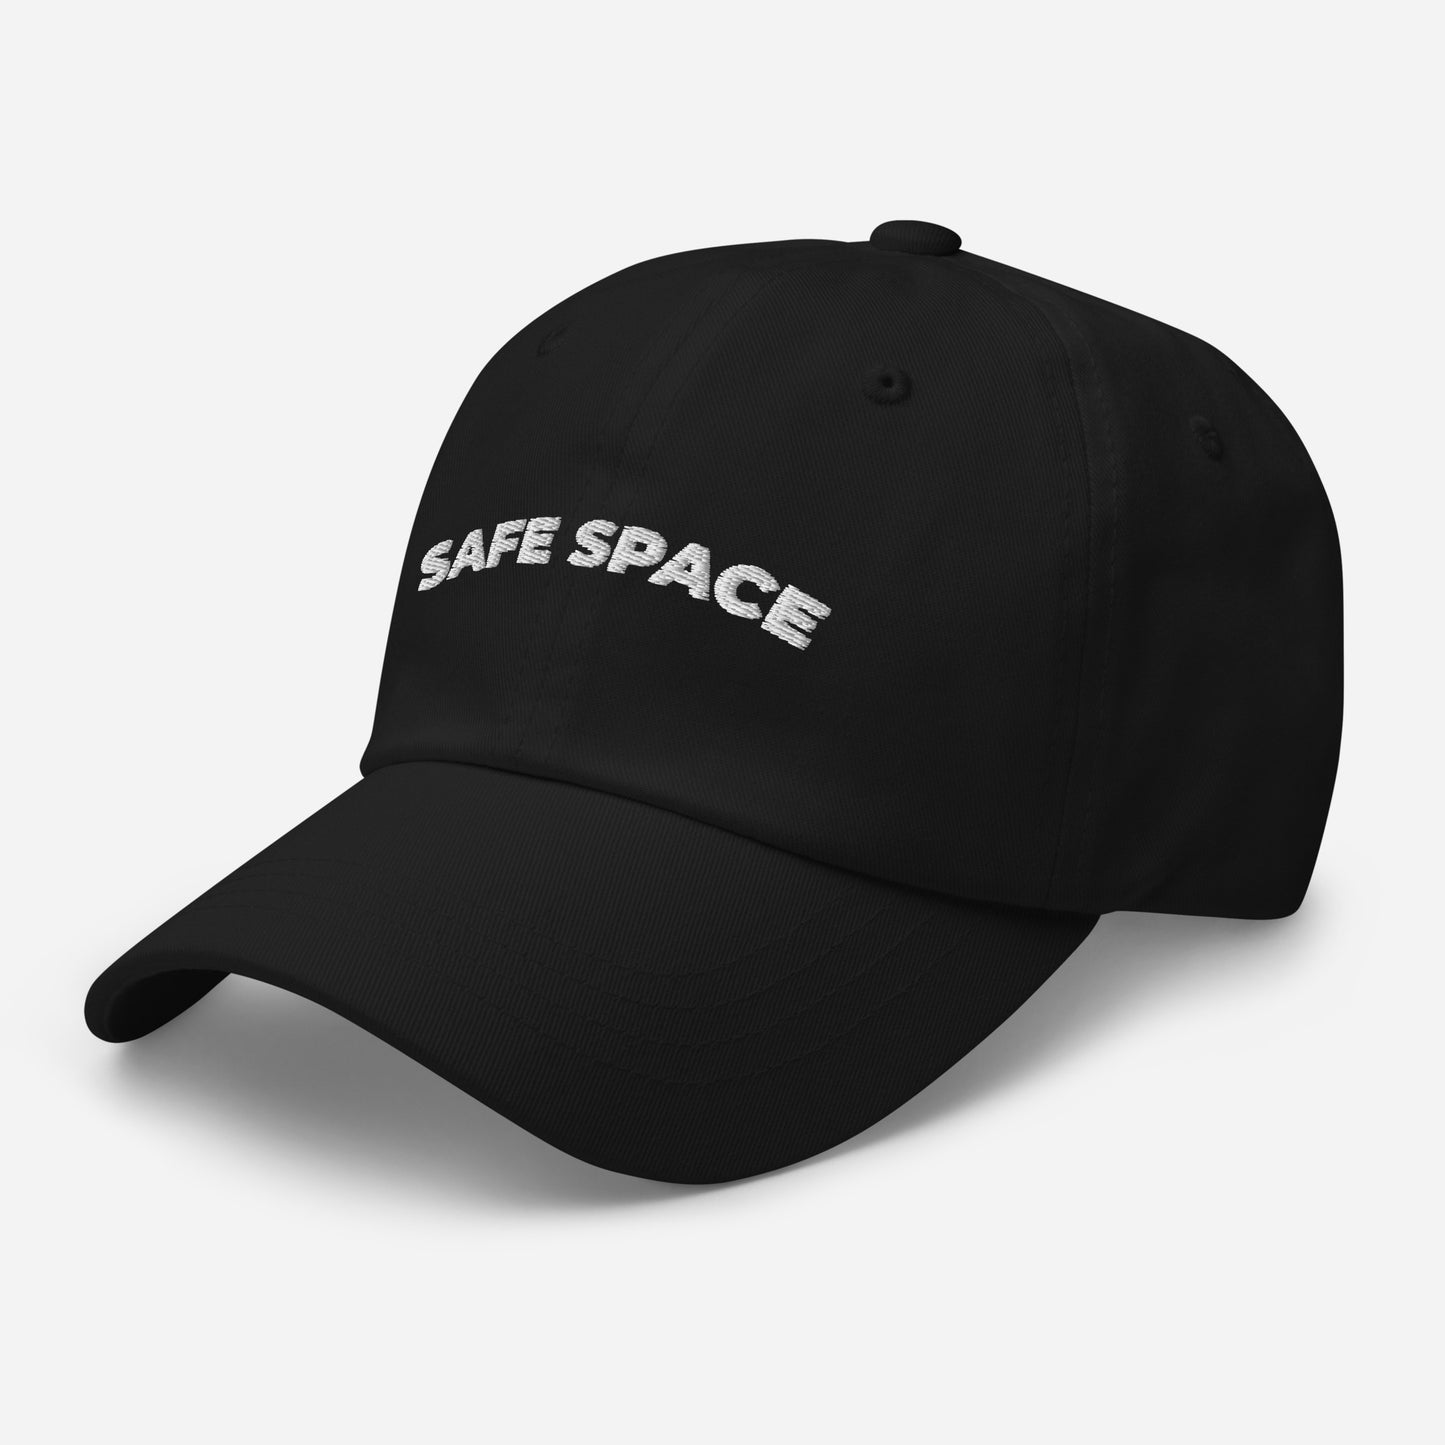 "Safe Space" Dad hat